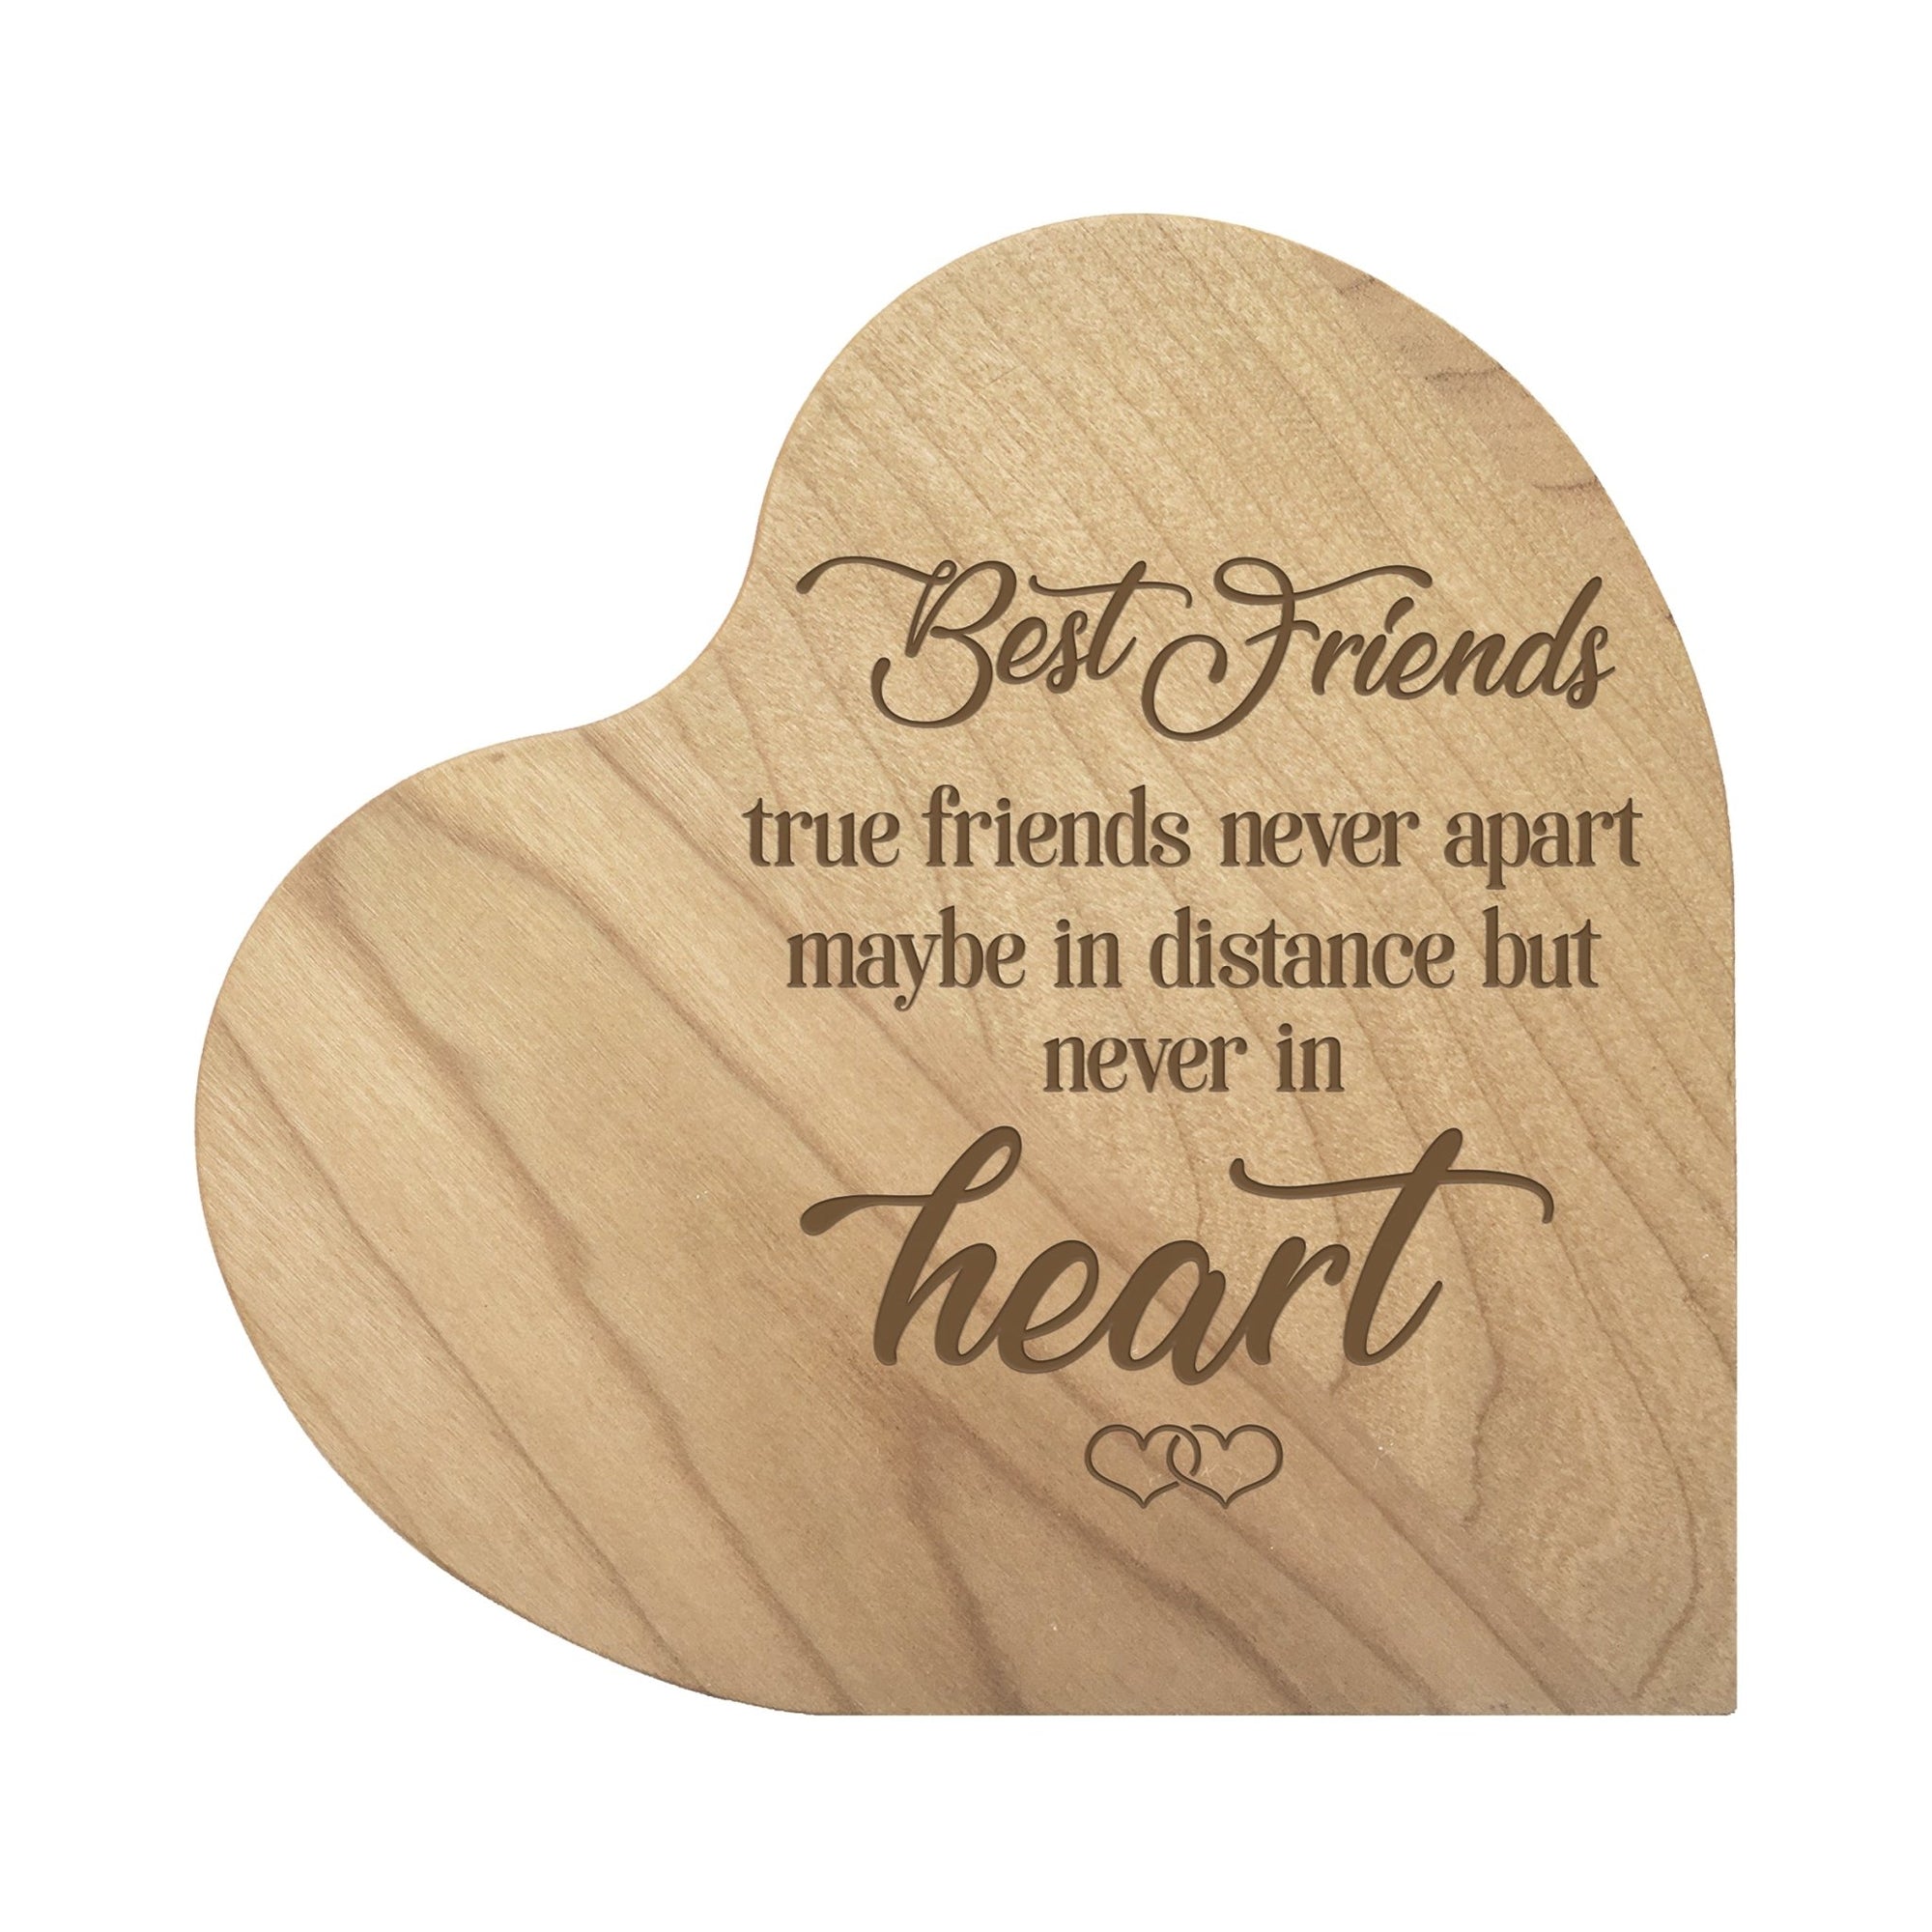 Engraved Wooden Heart Block 5” x 5.25” x 0.75”- Best Friends - LifeSong Milestones